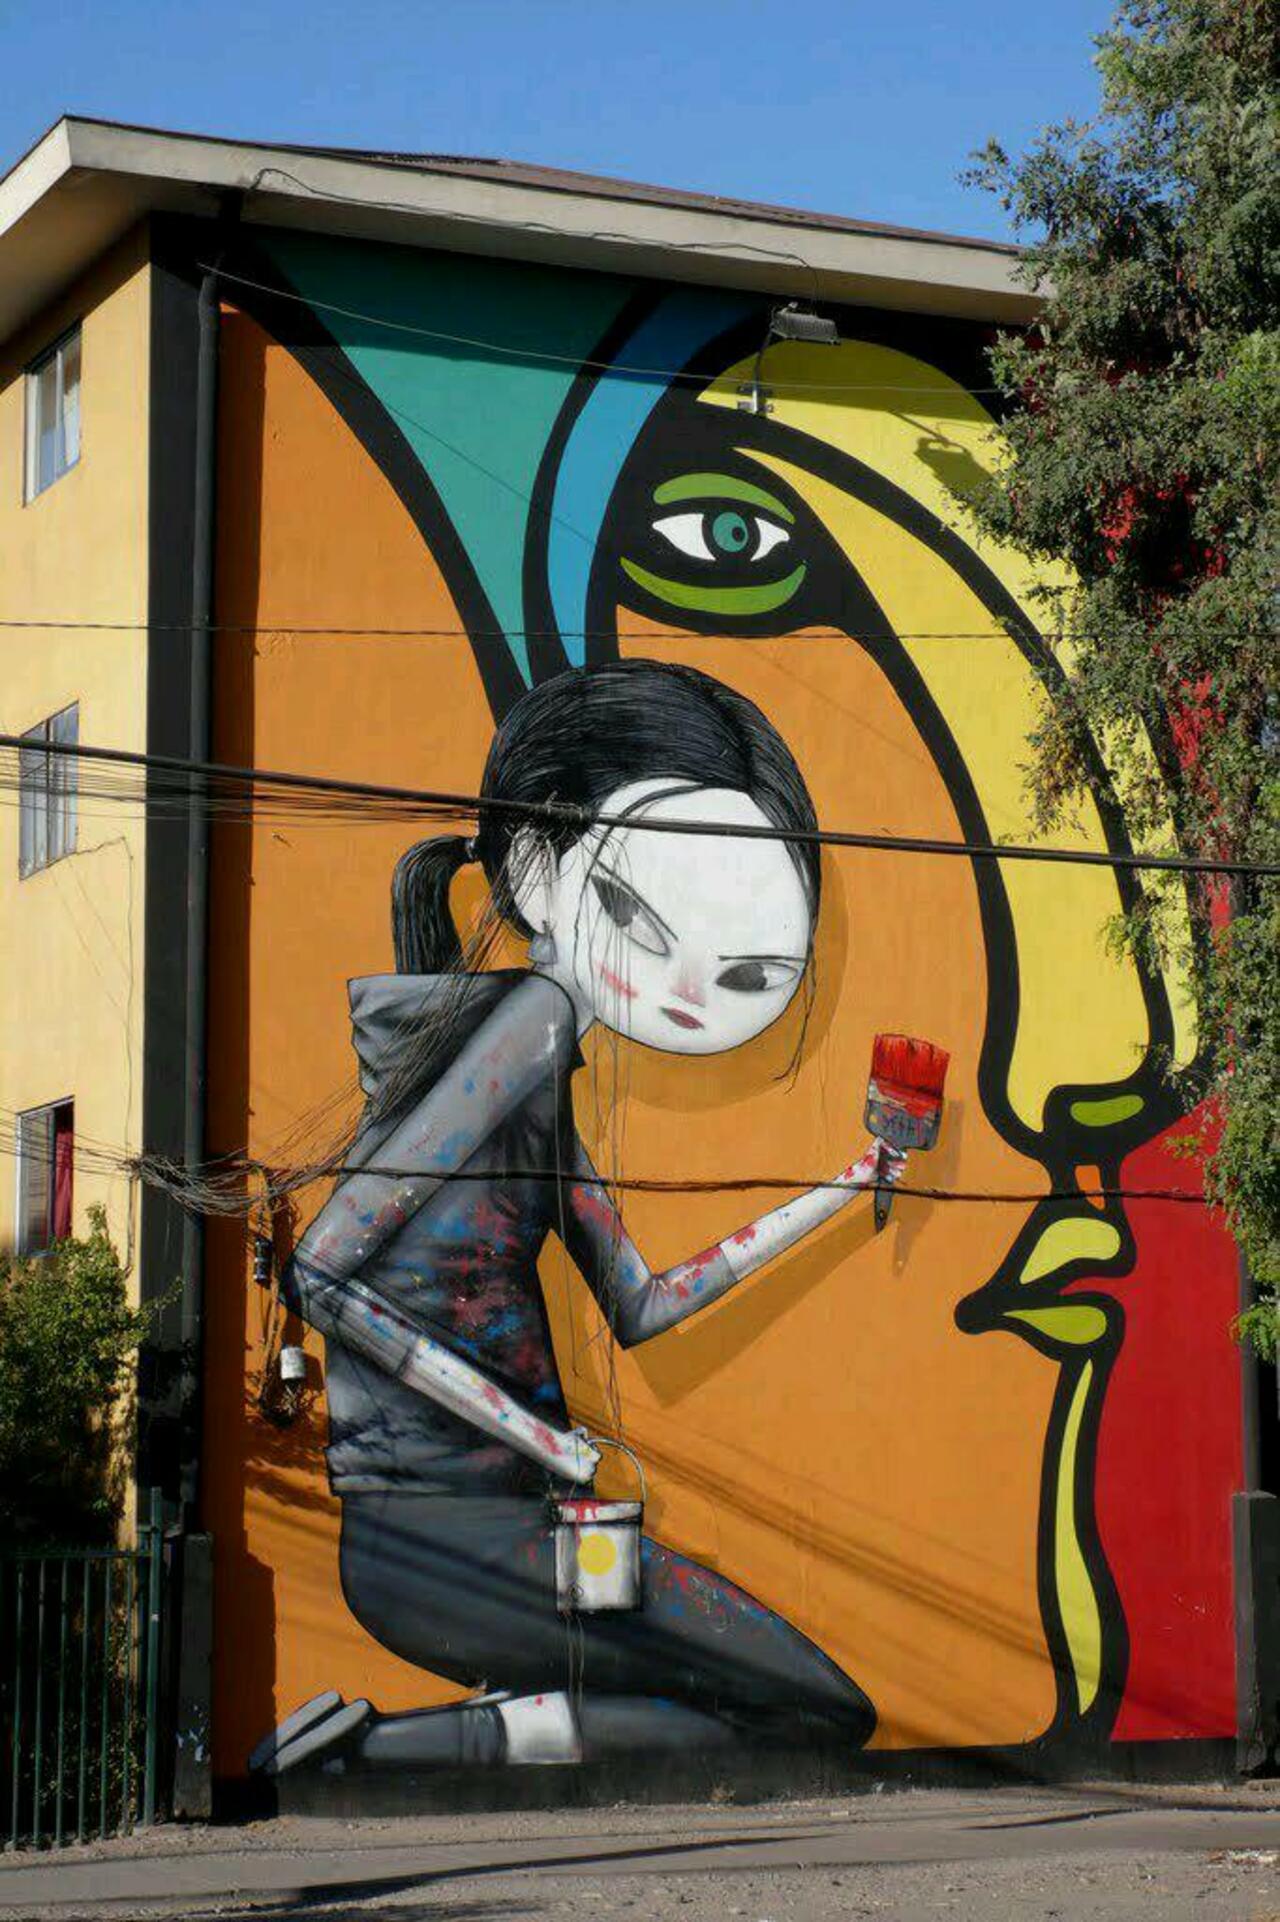 RT @gamze_ng: #streetart #graffiti   http://t.co/klP3Ws7OHb